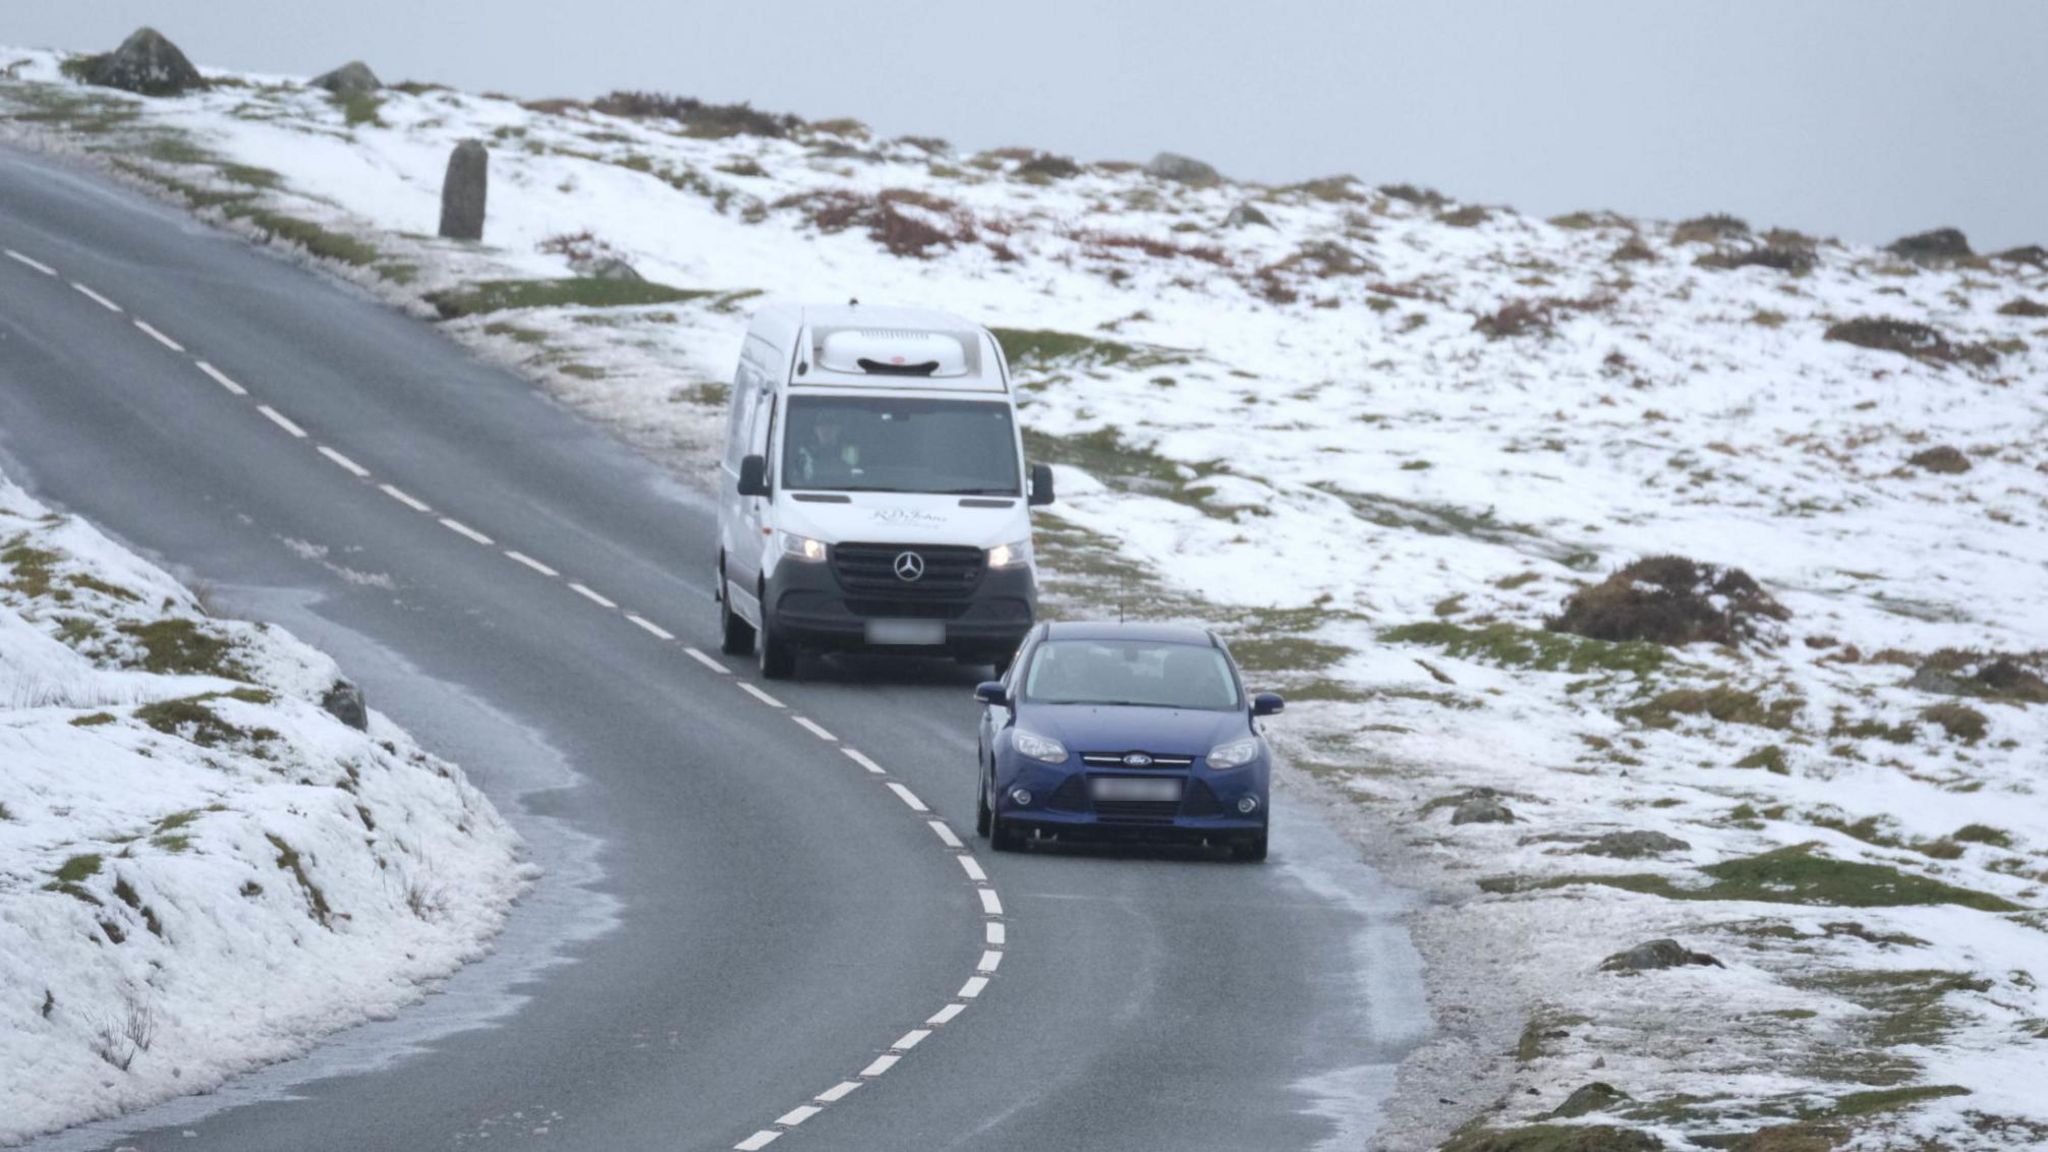 A car and van on a Dartmoor road